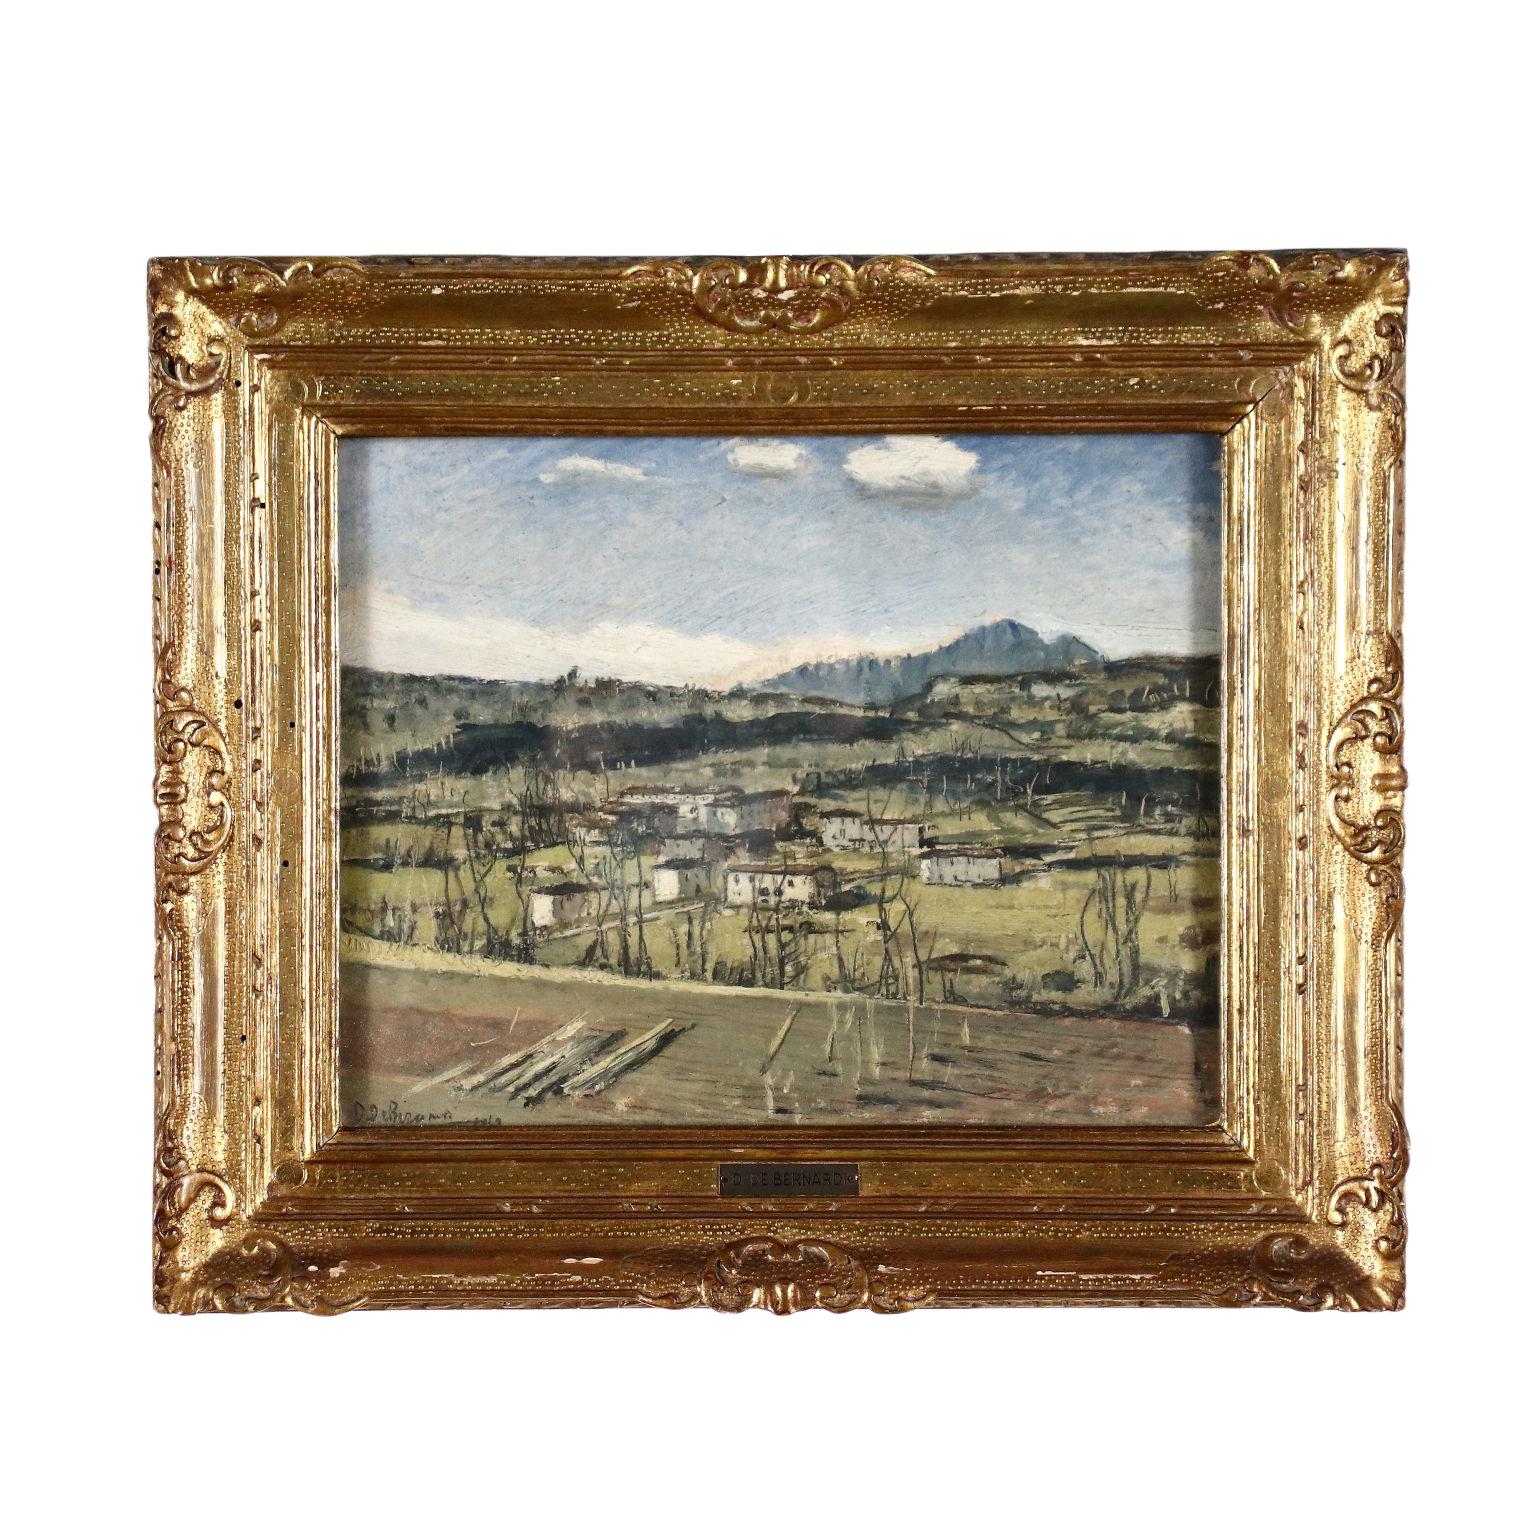 Unknown Landscape Painting - Landscape, Domenico de Bernardi, oil on canvas, 20th century